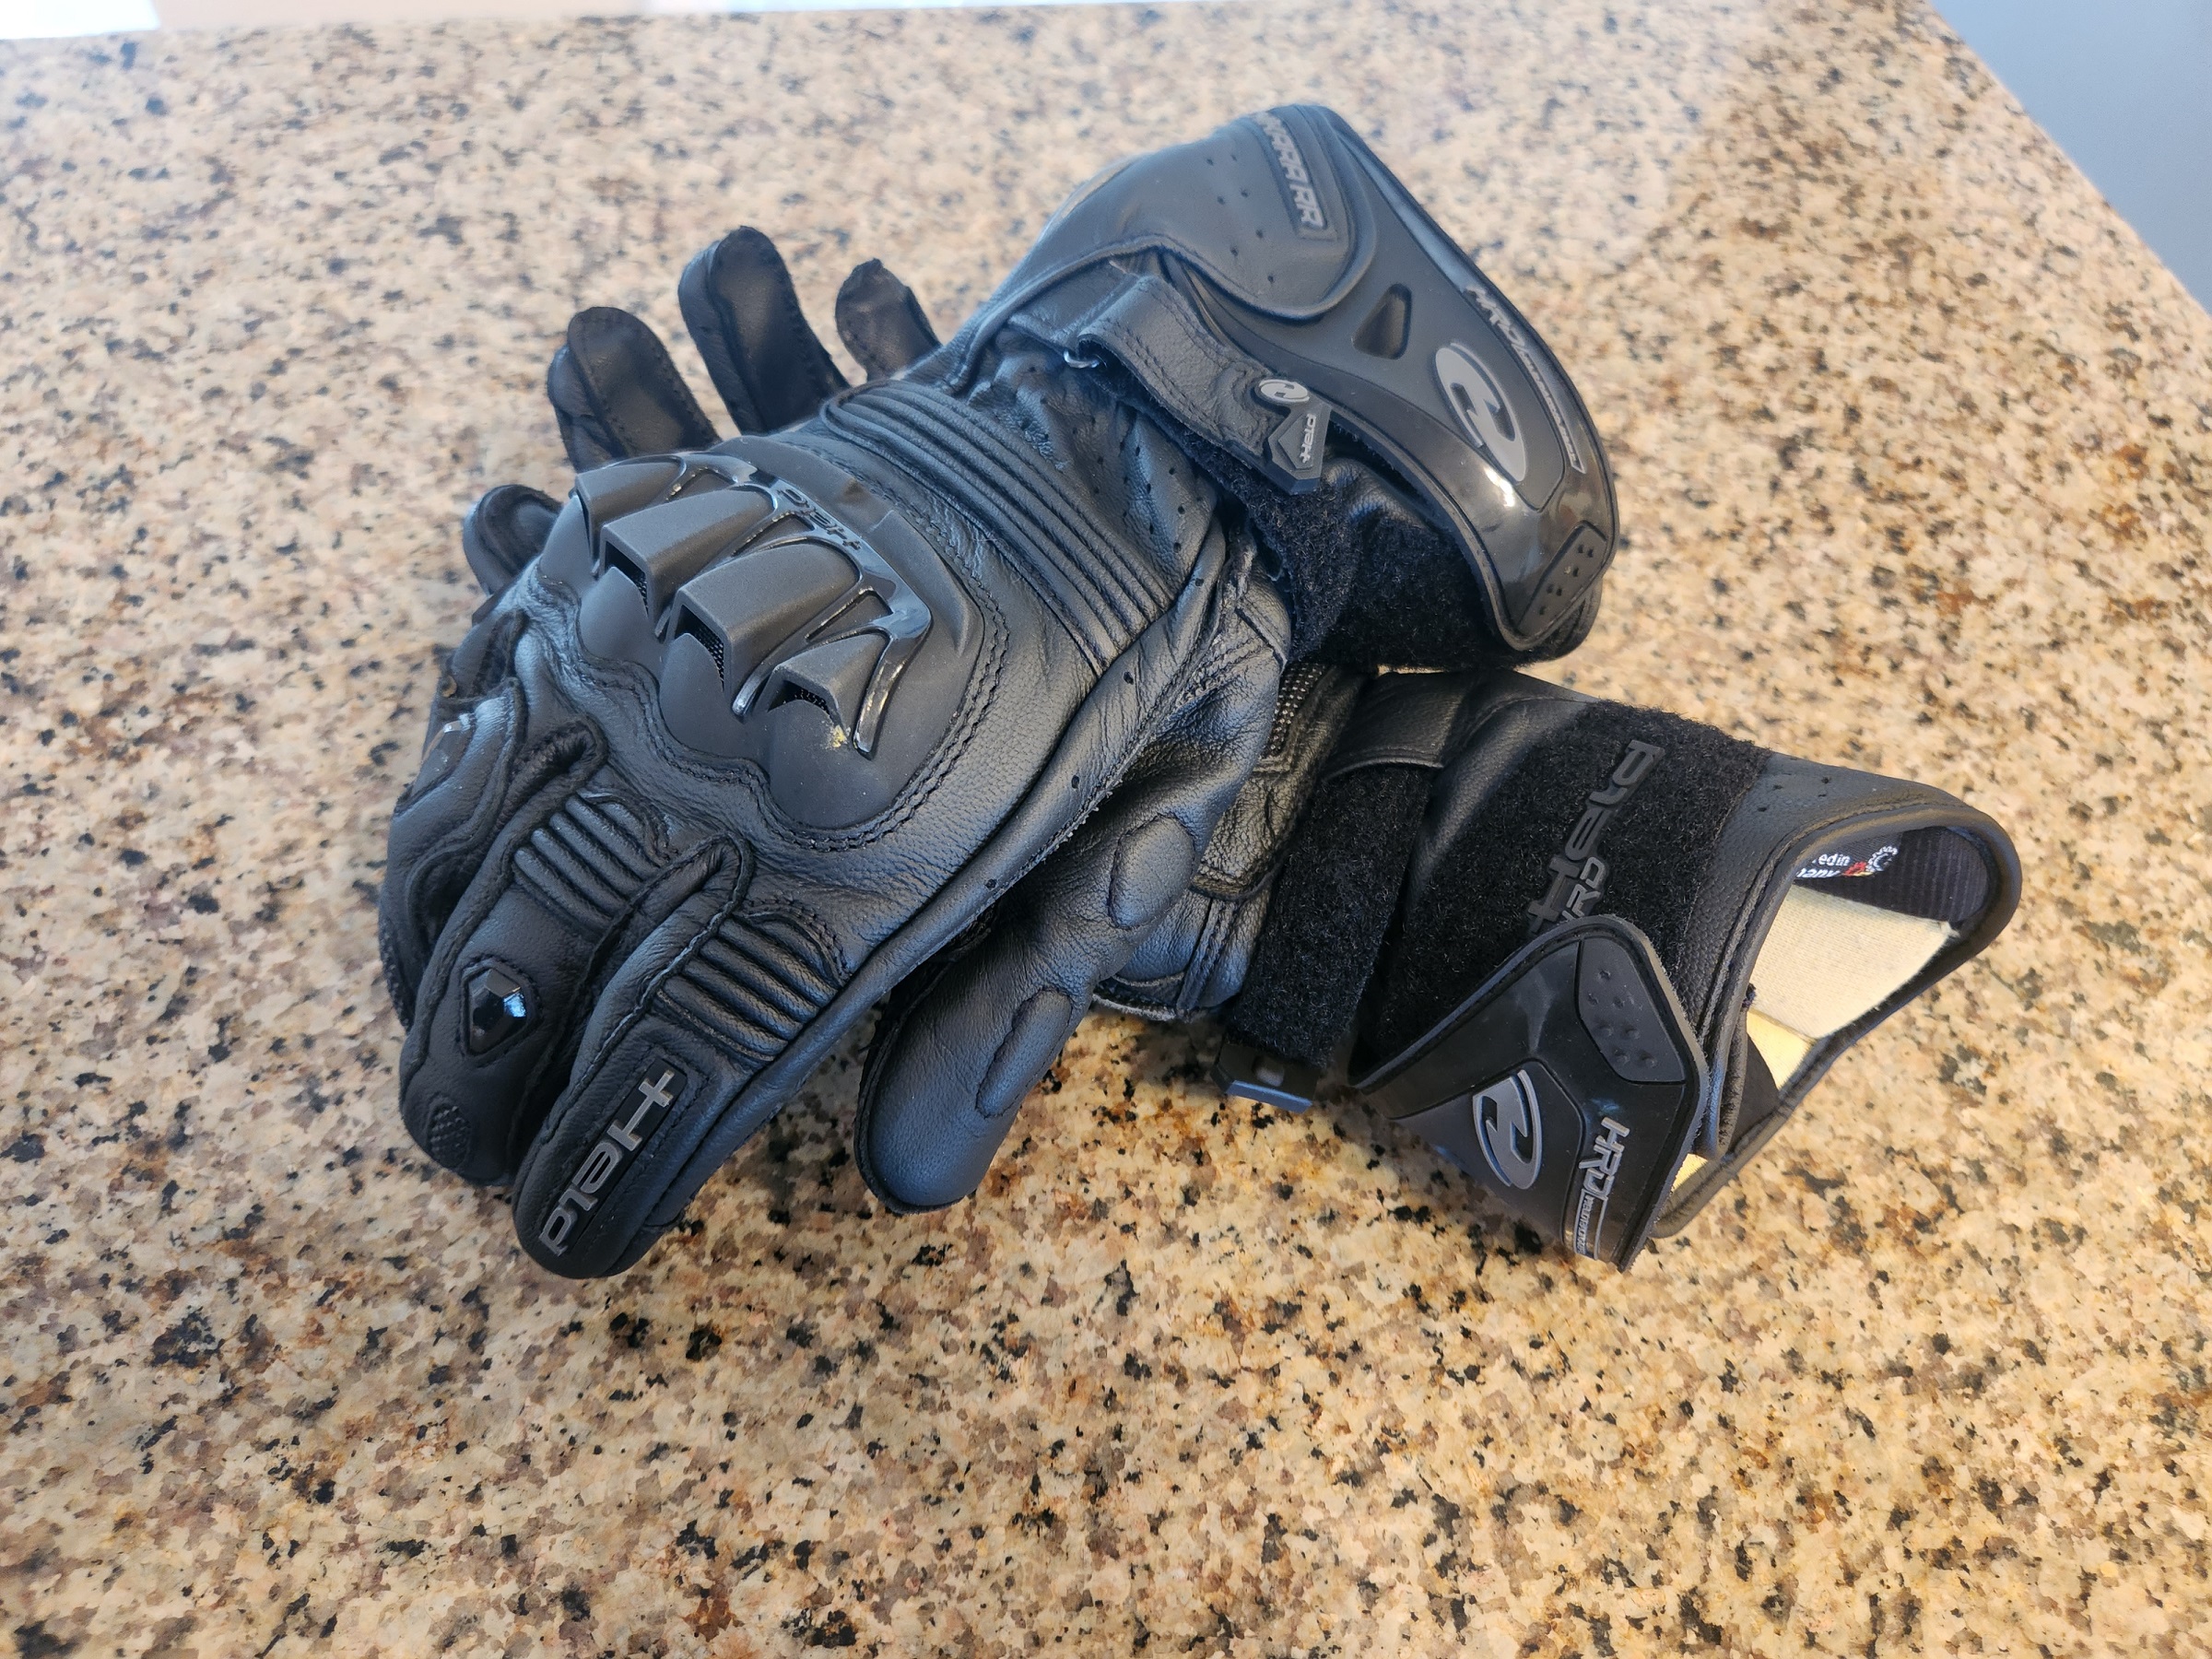 Held Chikara RR gloves